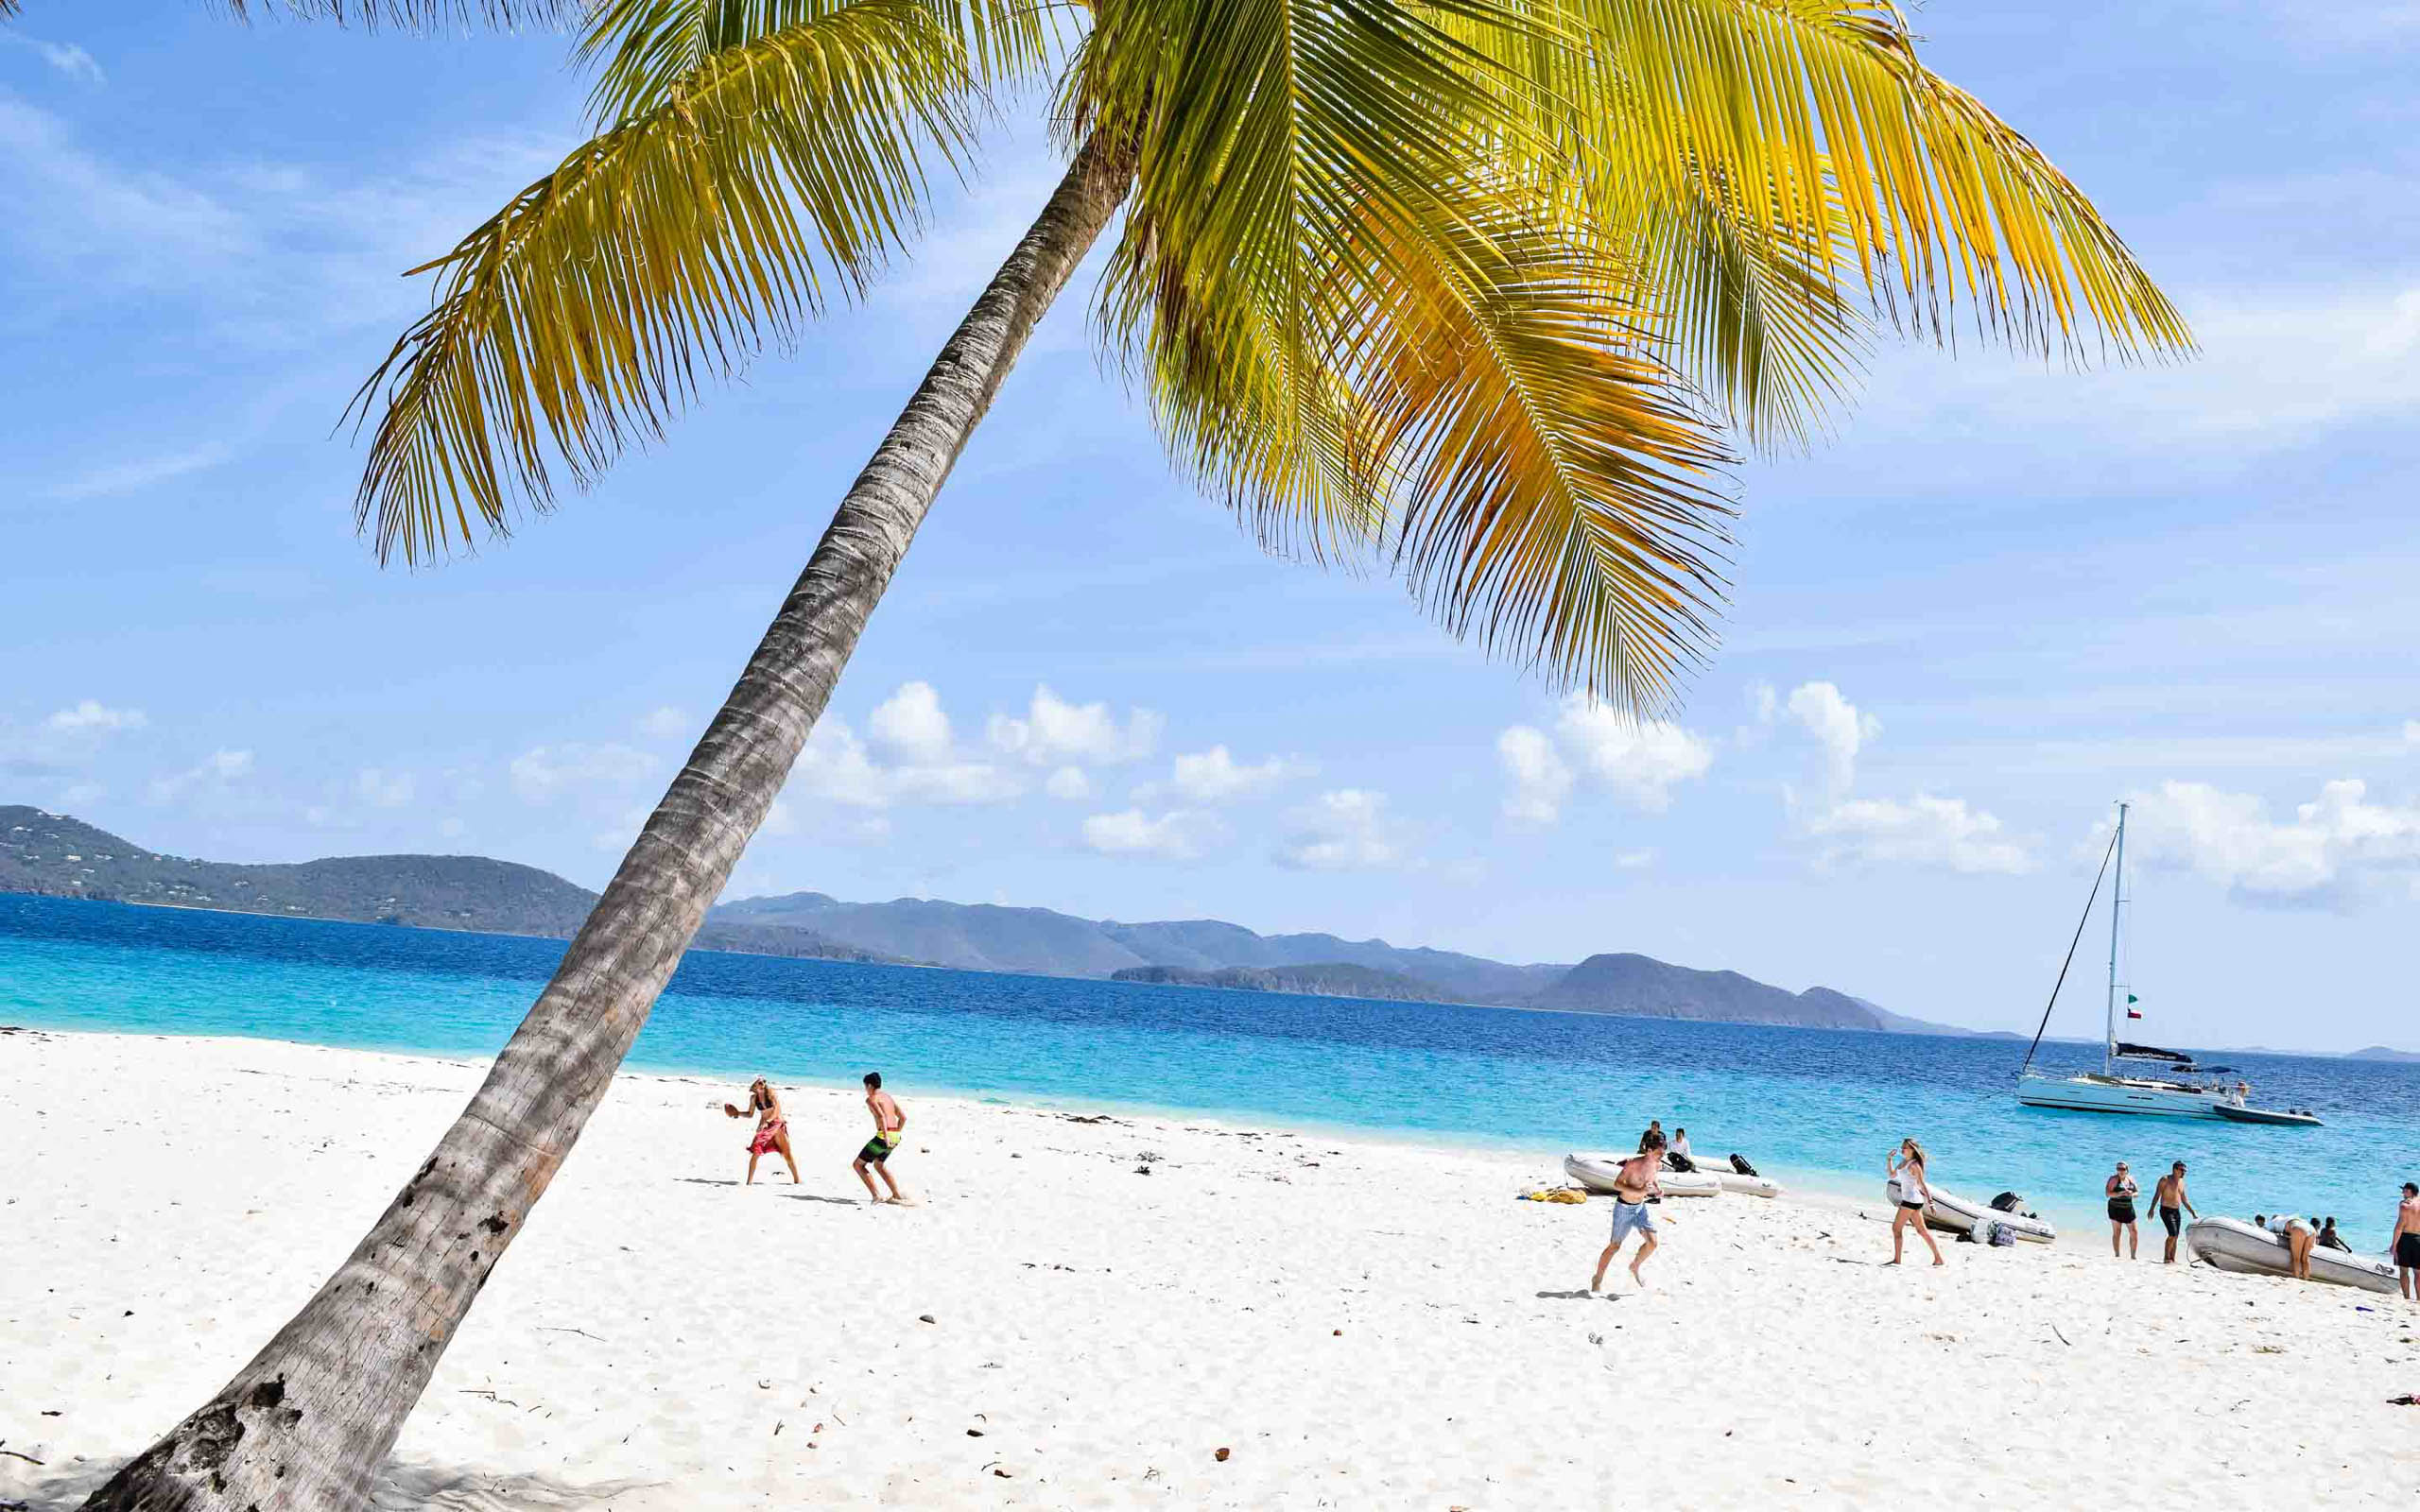 A white sandy beach with a palm tree.